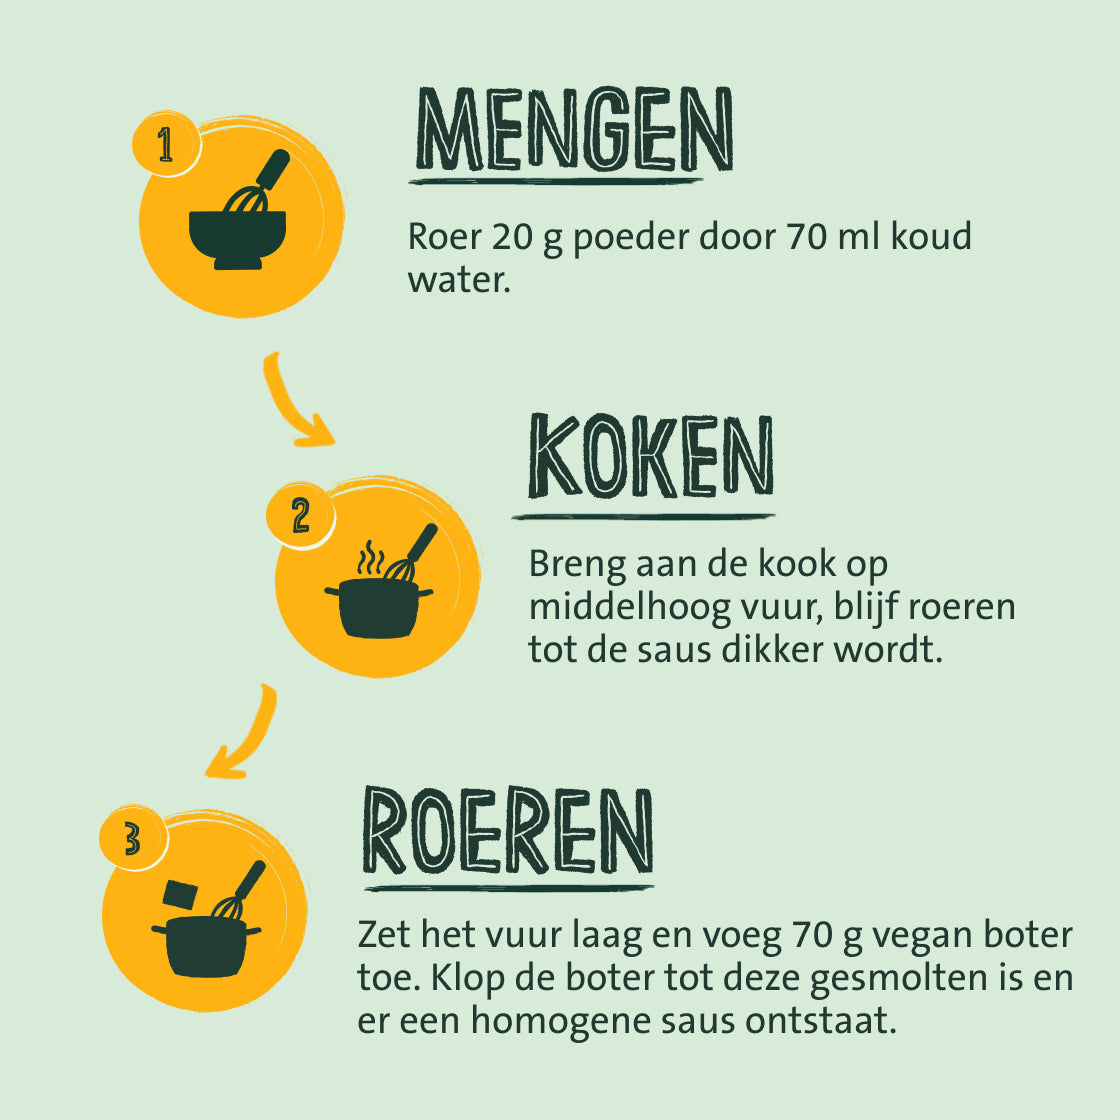 Vegan hollandaisesaus